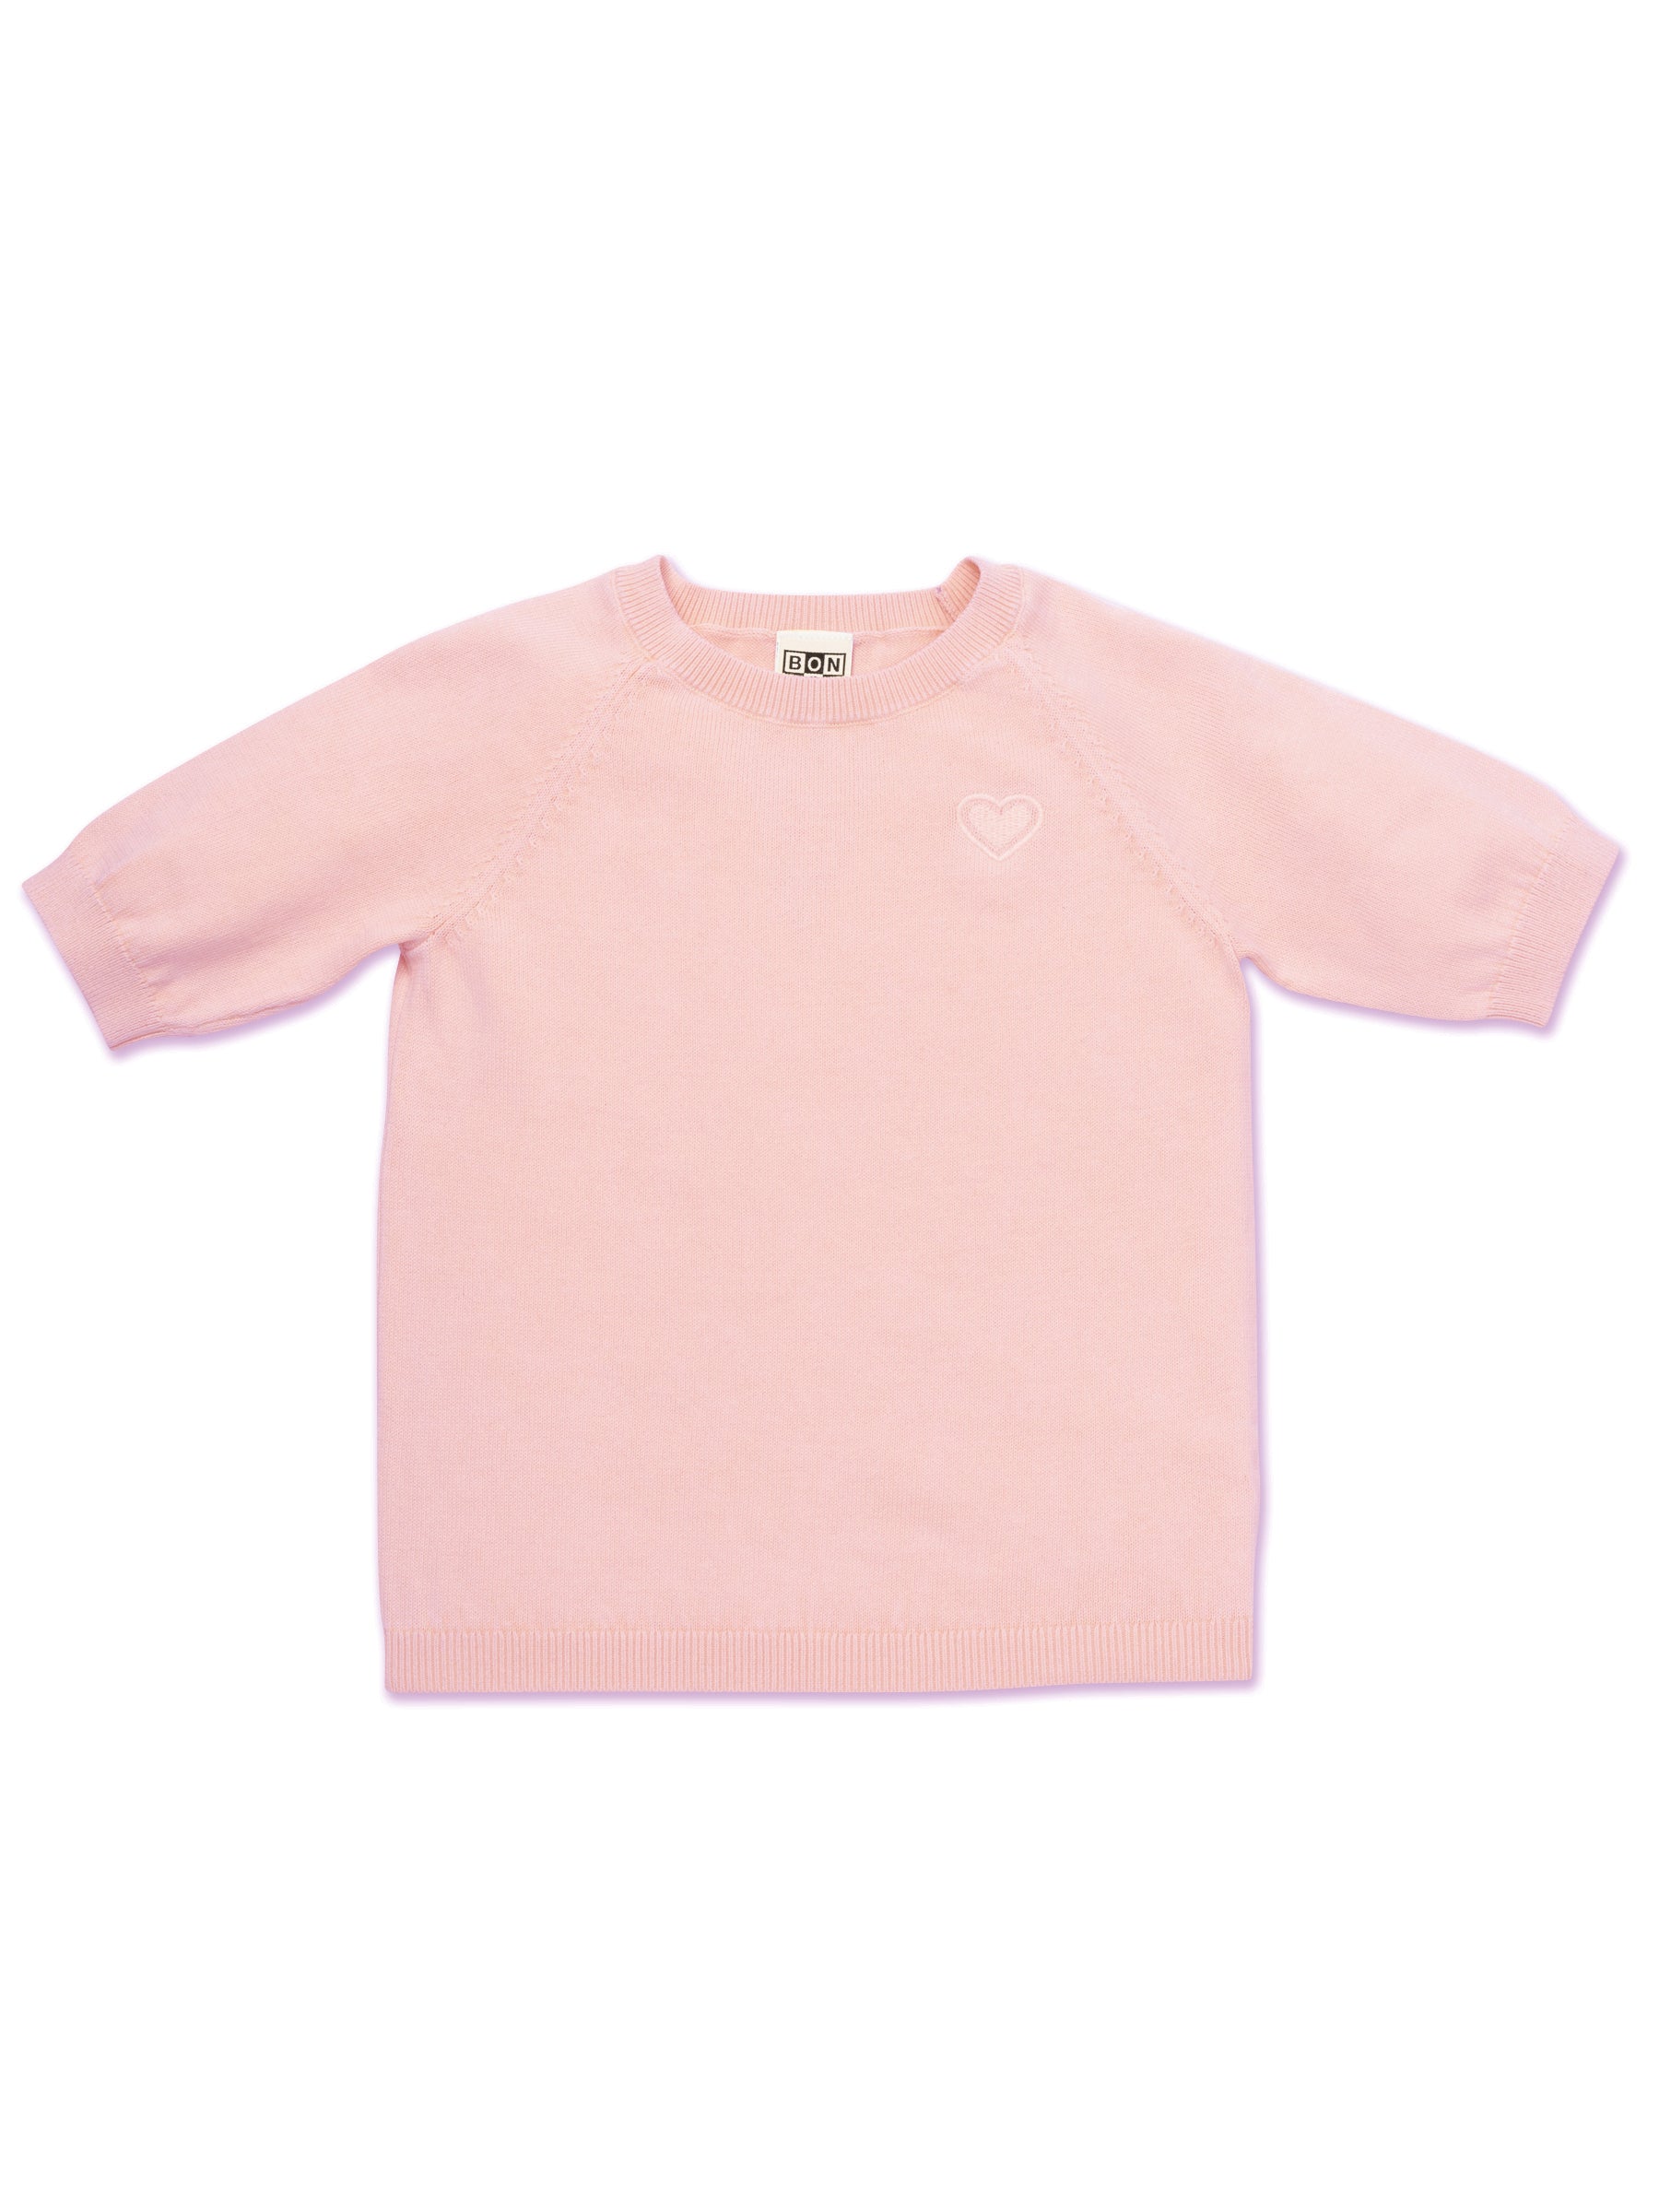 Girls Pink Short Sleeves Sweater